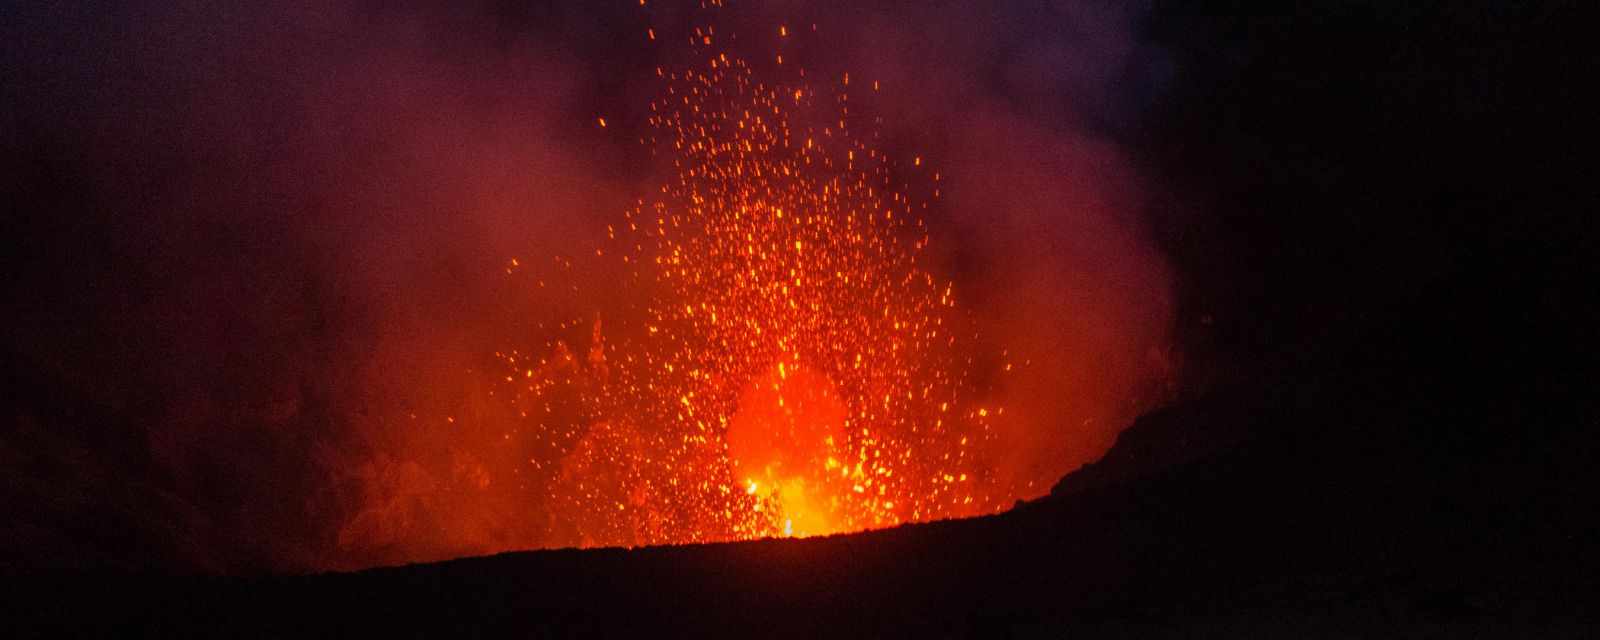 500 Eruptions Daily at Volcano Mount Yasur - Tanna Island in Vanuatu